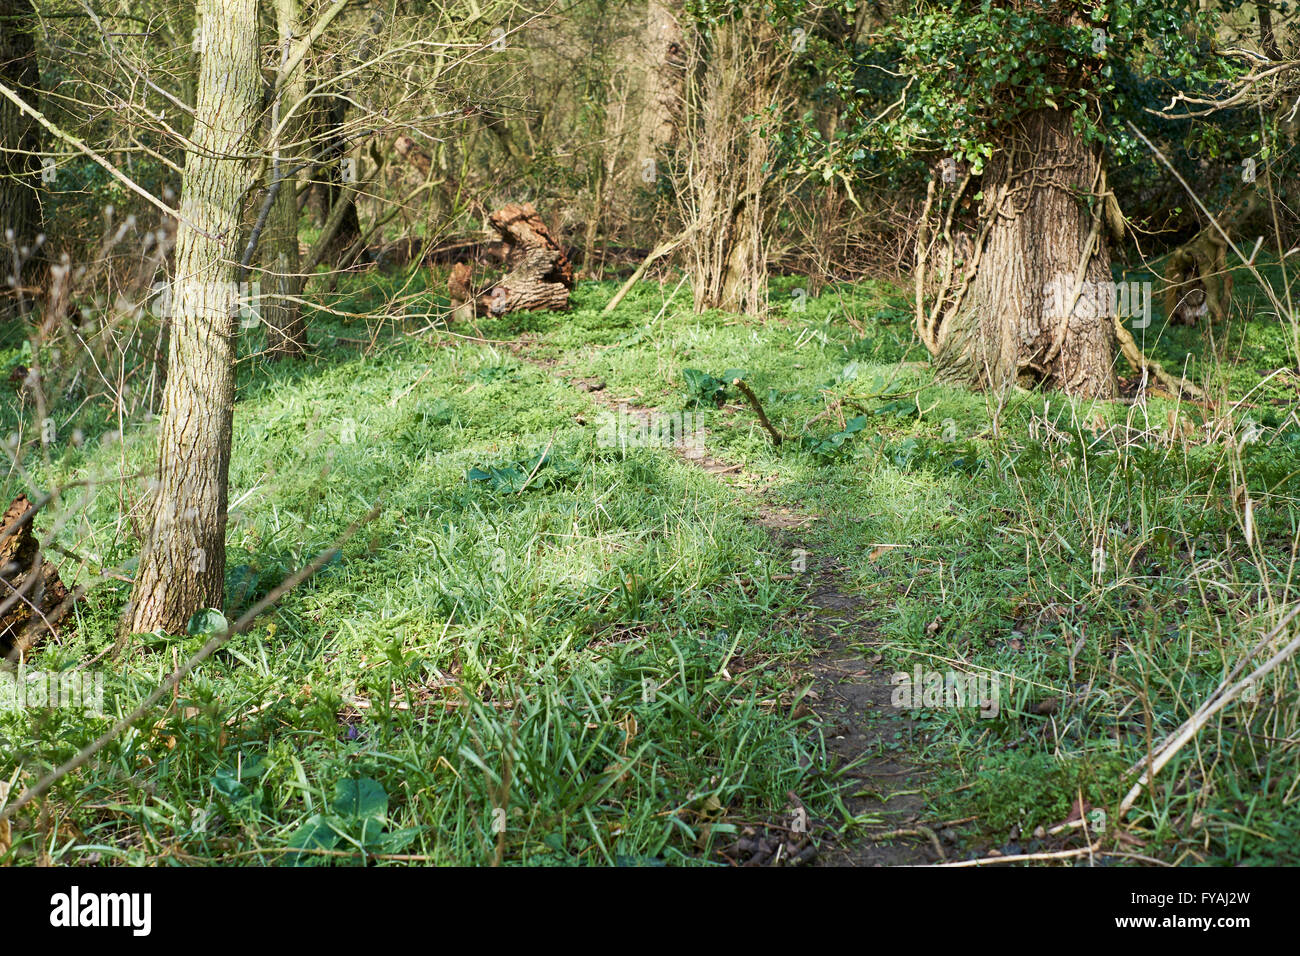 Badger (Meles meles) trail through woodland. UK. Stock Photo